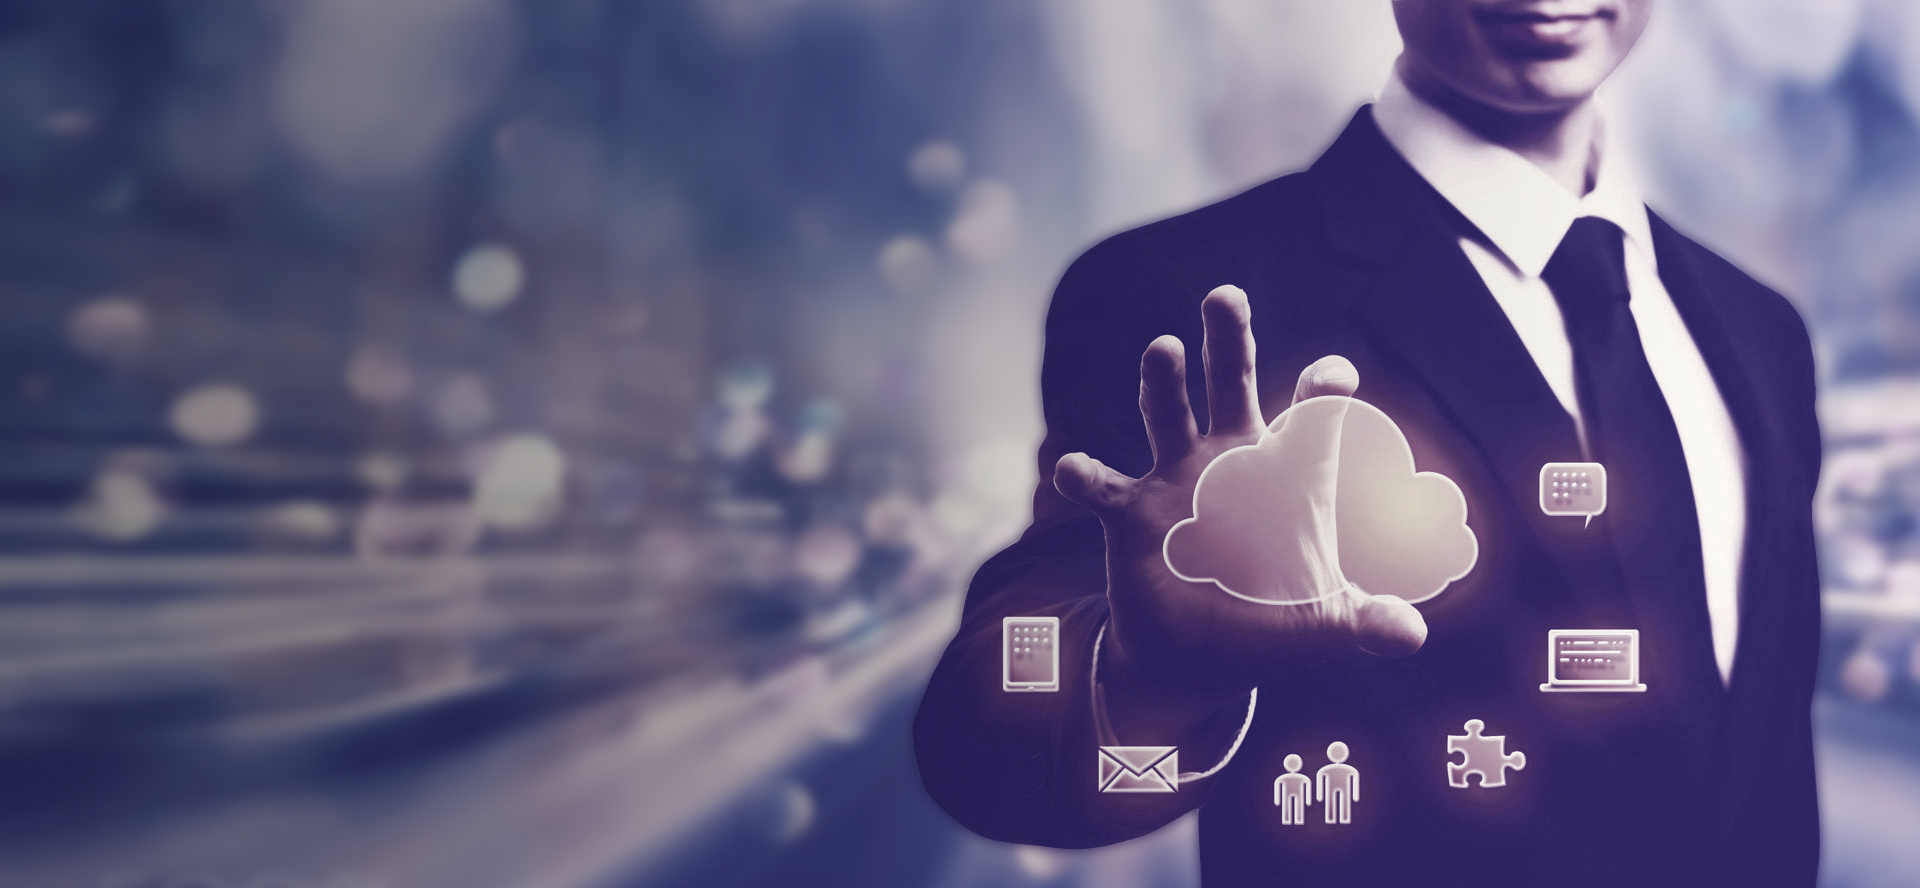 Trusted Cloud Identity Management Platform